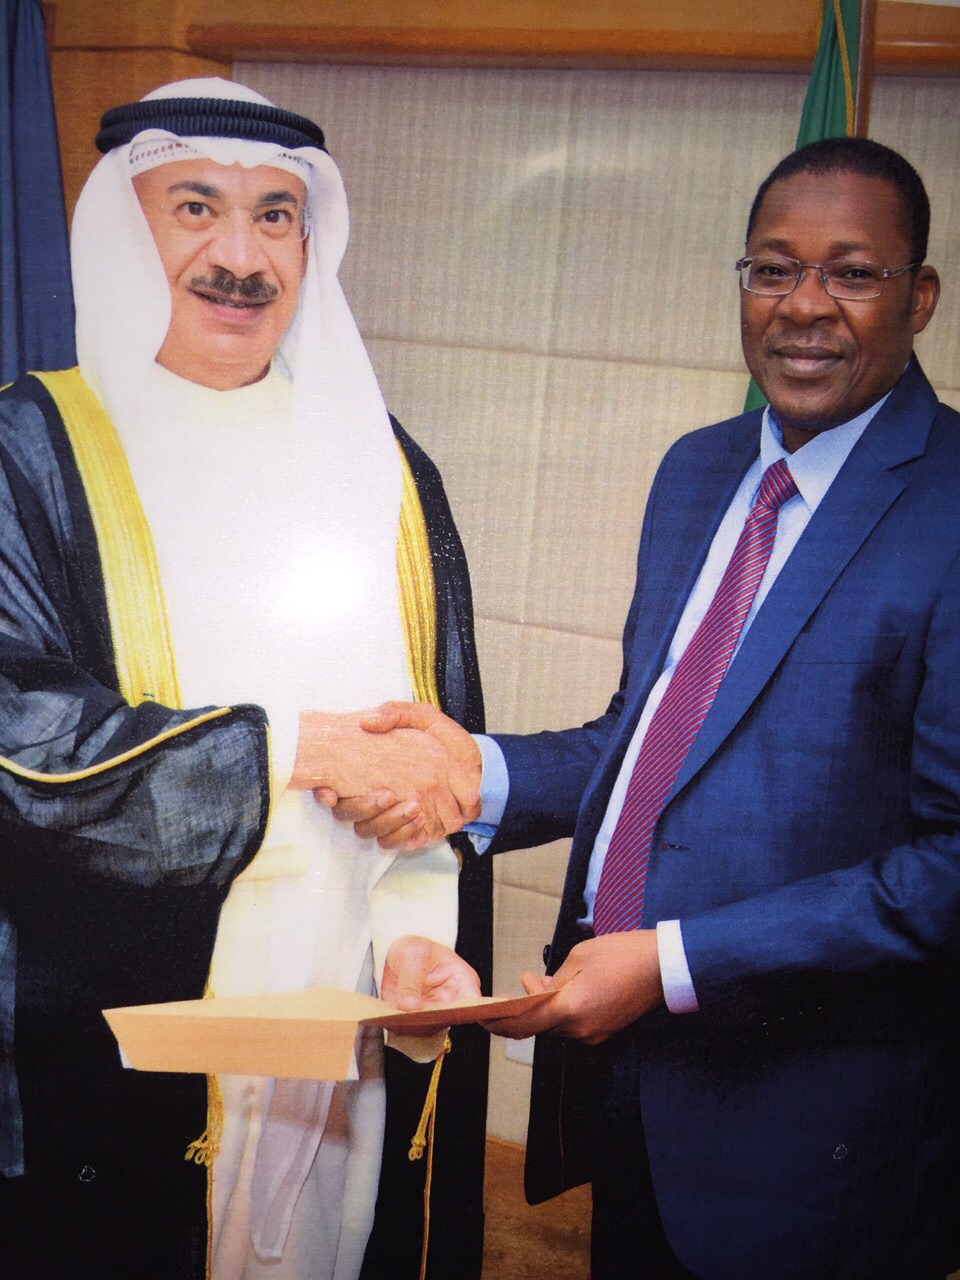 Kuwaiti Ambassador to Benin Fayez Mishari Al-Jassim hands the letter to to Benin's Foreign Affairs Minister Nasiro Bakoo